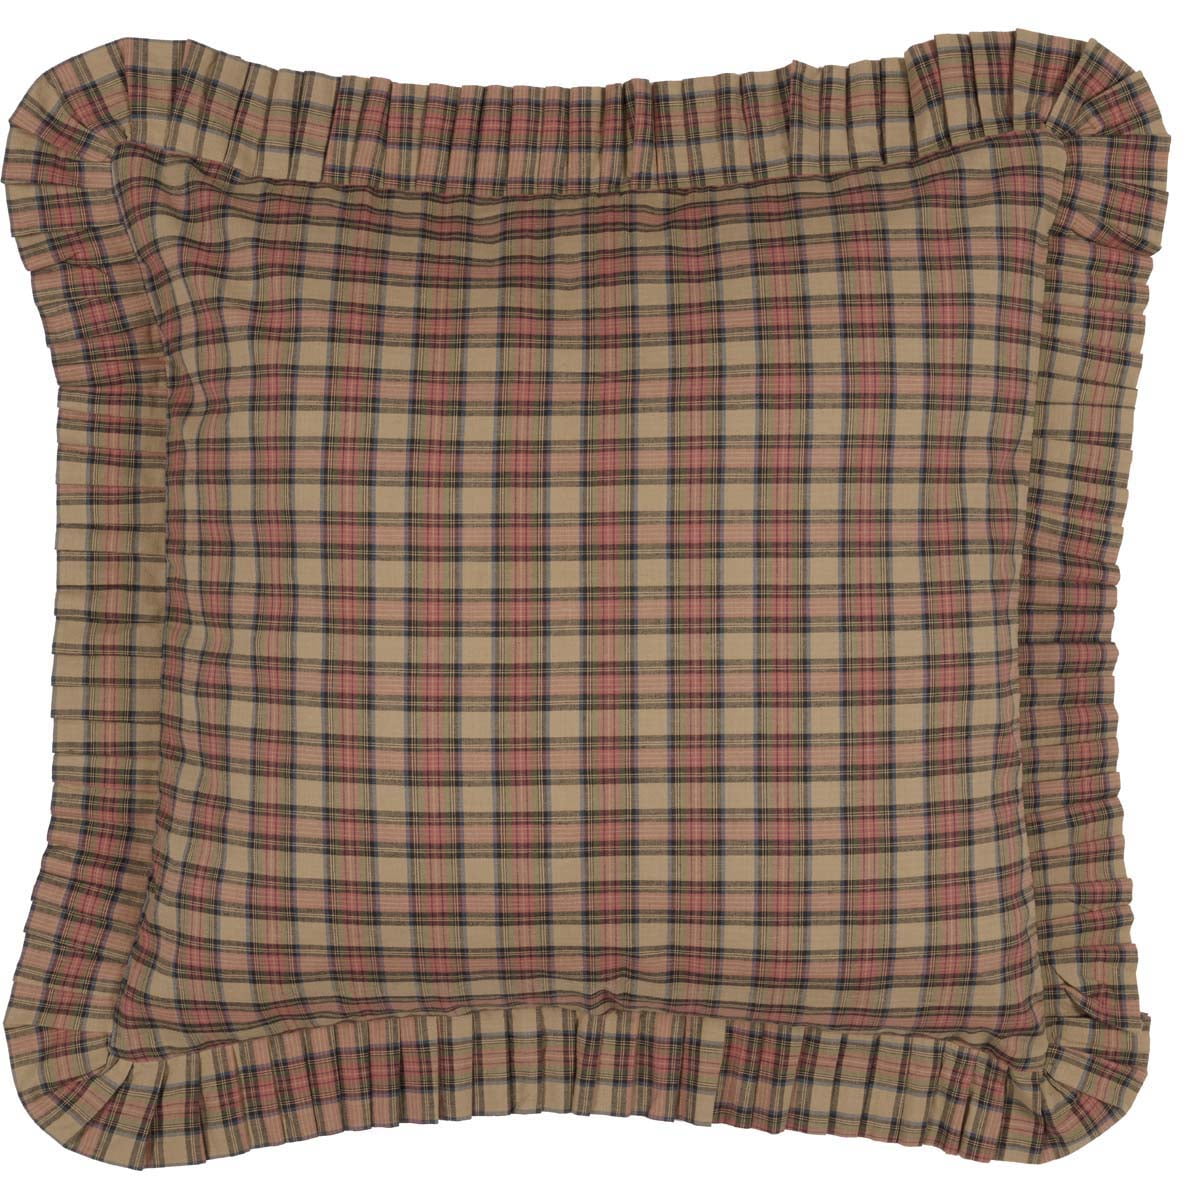 VHC Primitive Standard Pillow Case Set of 2 Bedding Black Check Cotton